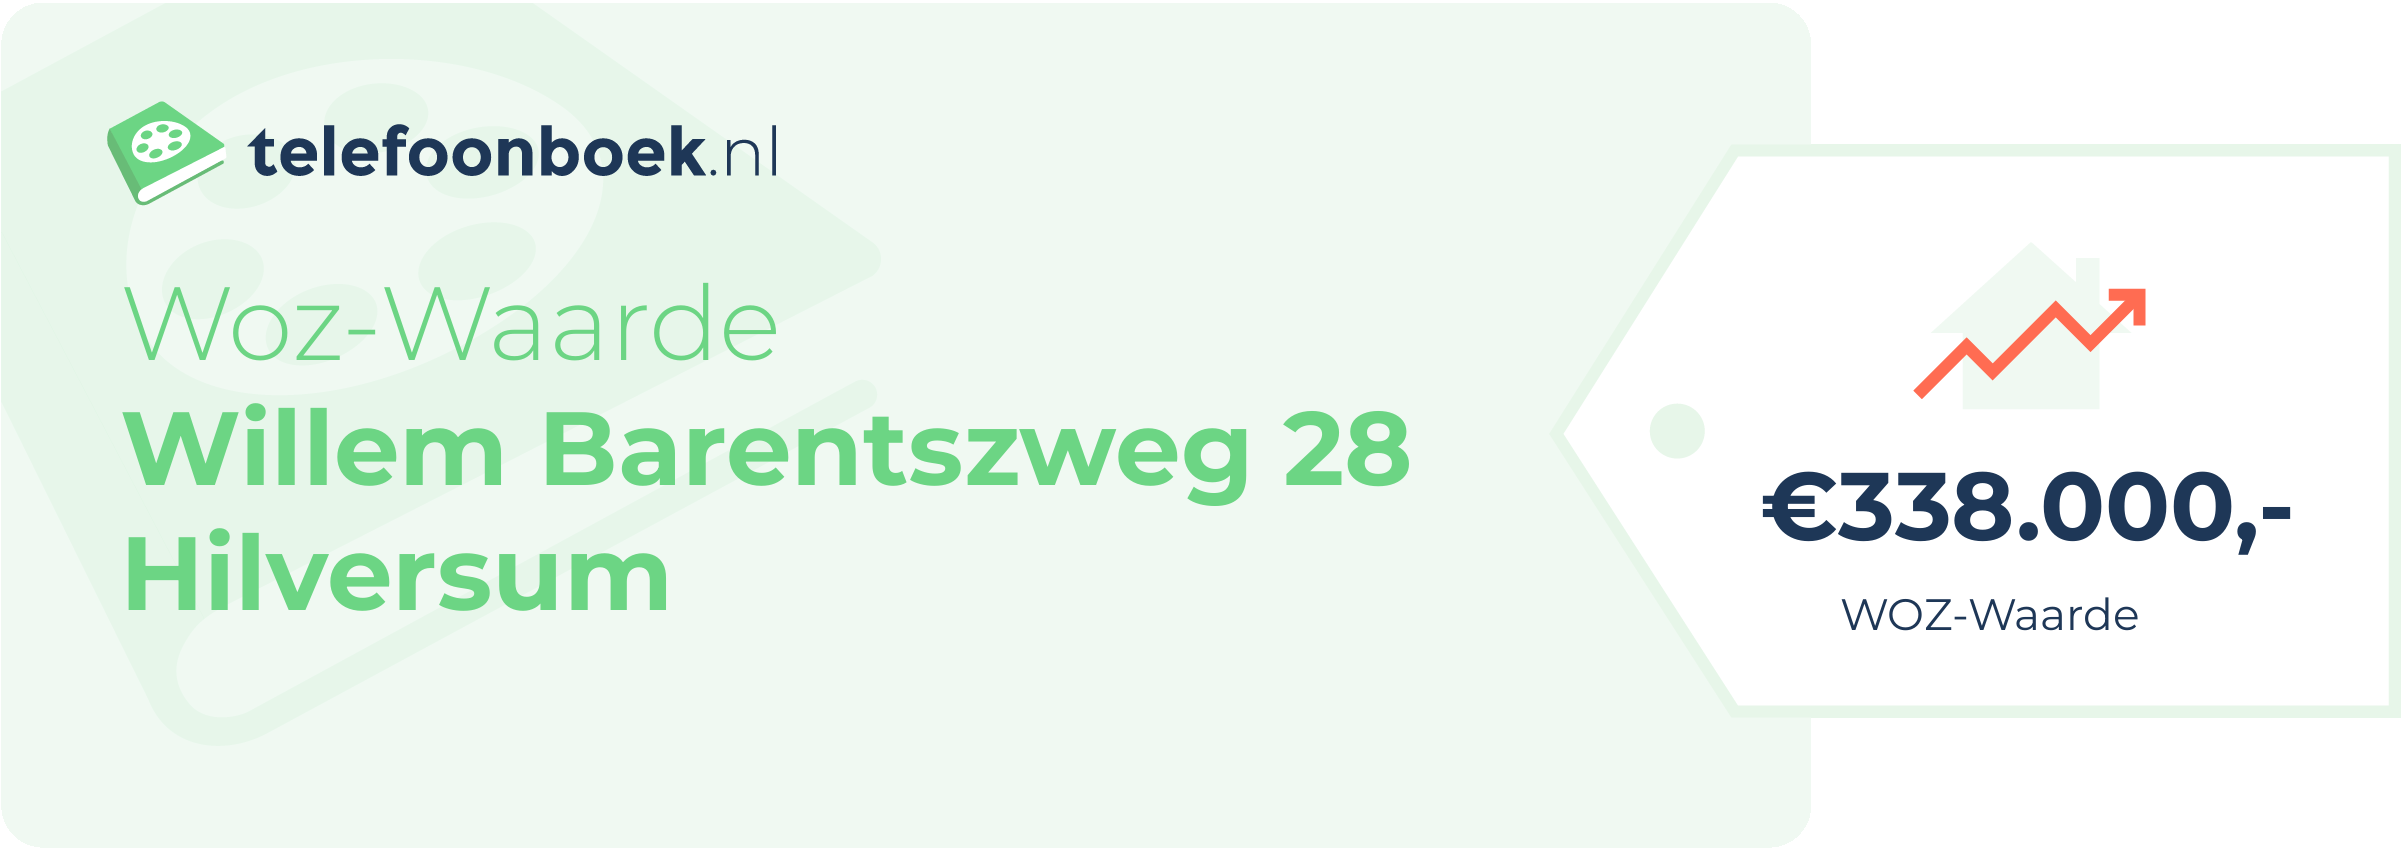 WOZ-waarde Willem Barentszweg 28 Hilversum